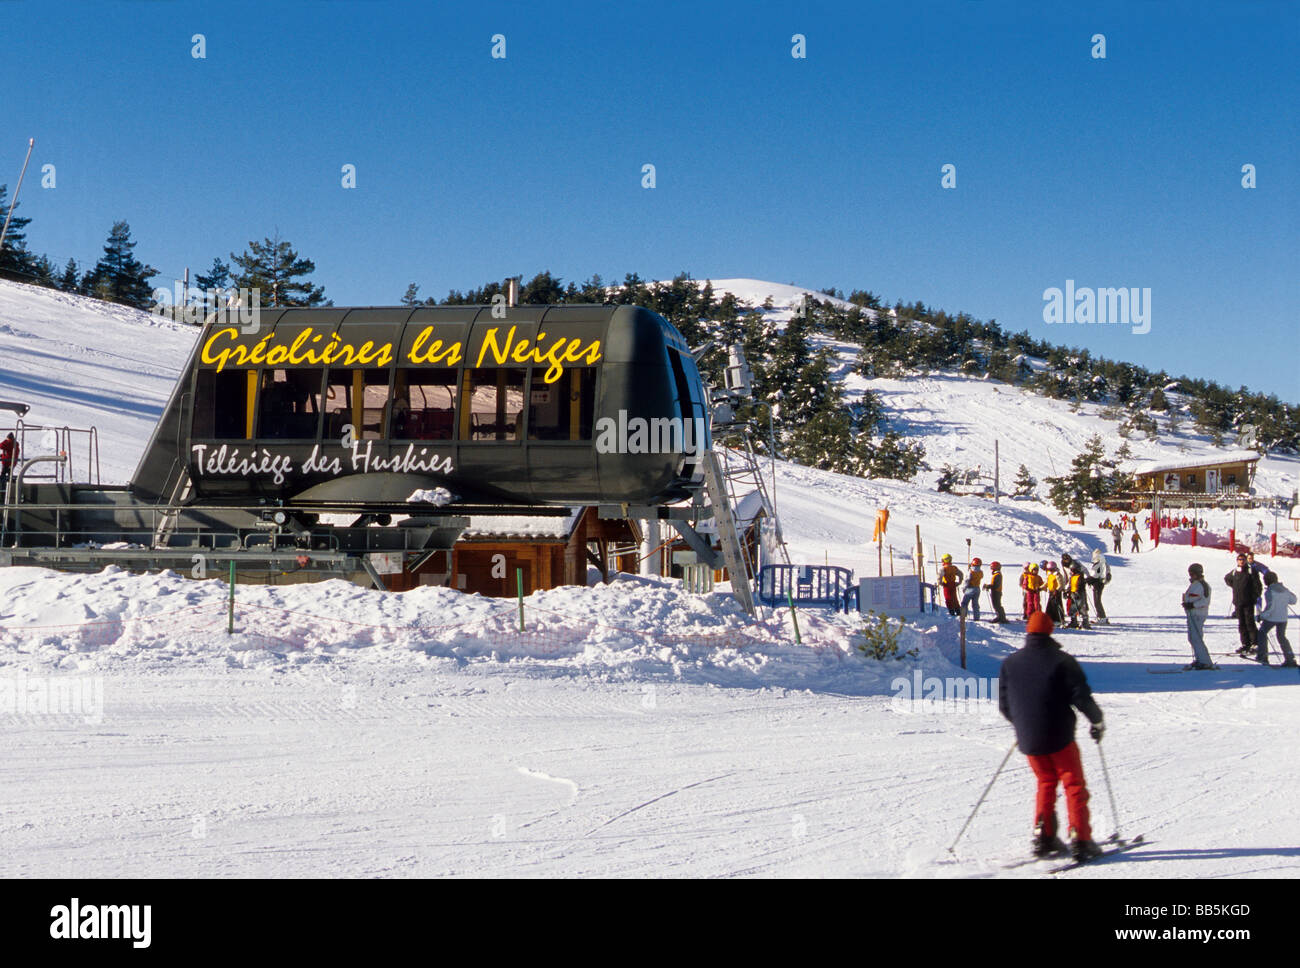 Die Ski-Station des Greoliere Les Neiges Stockfoto